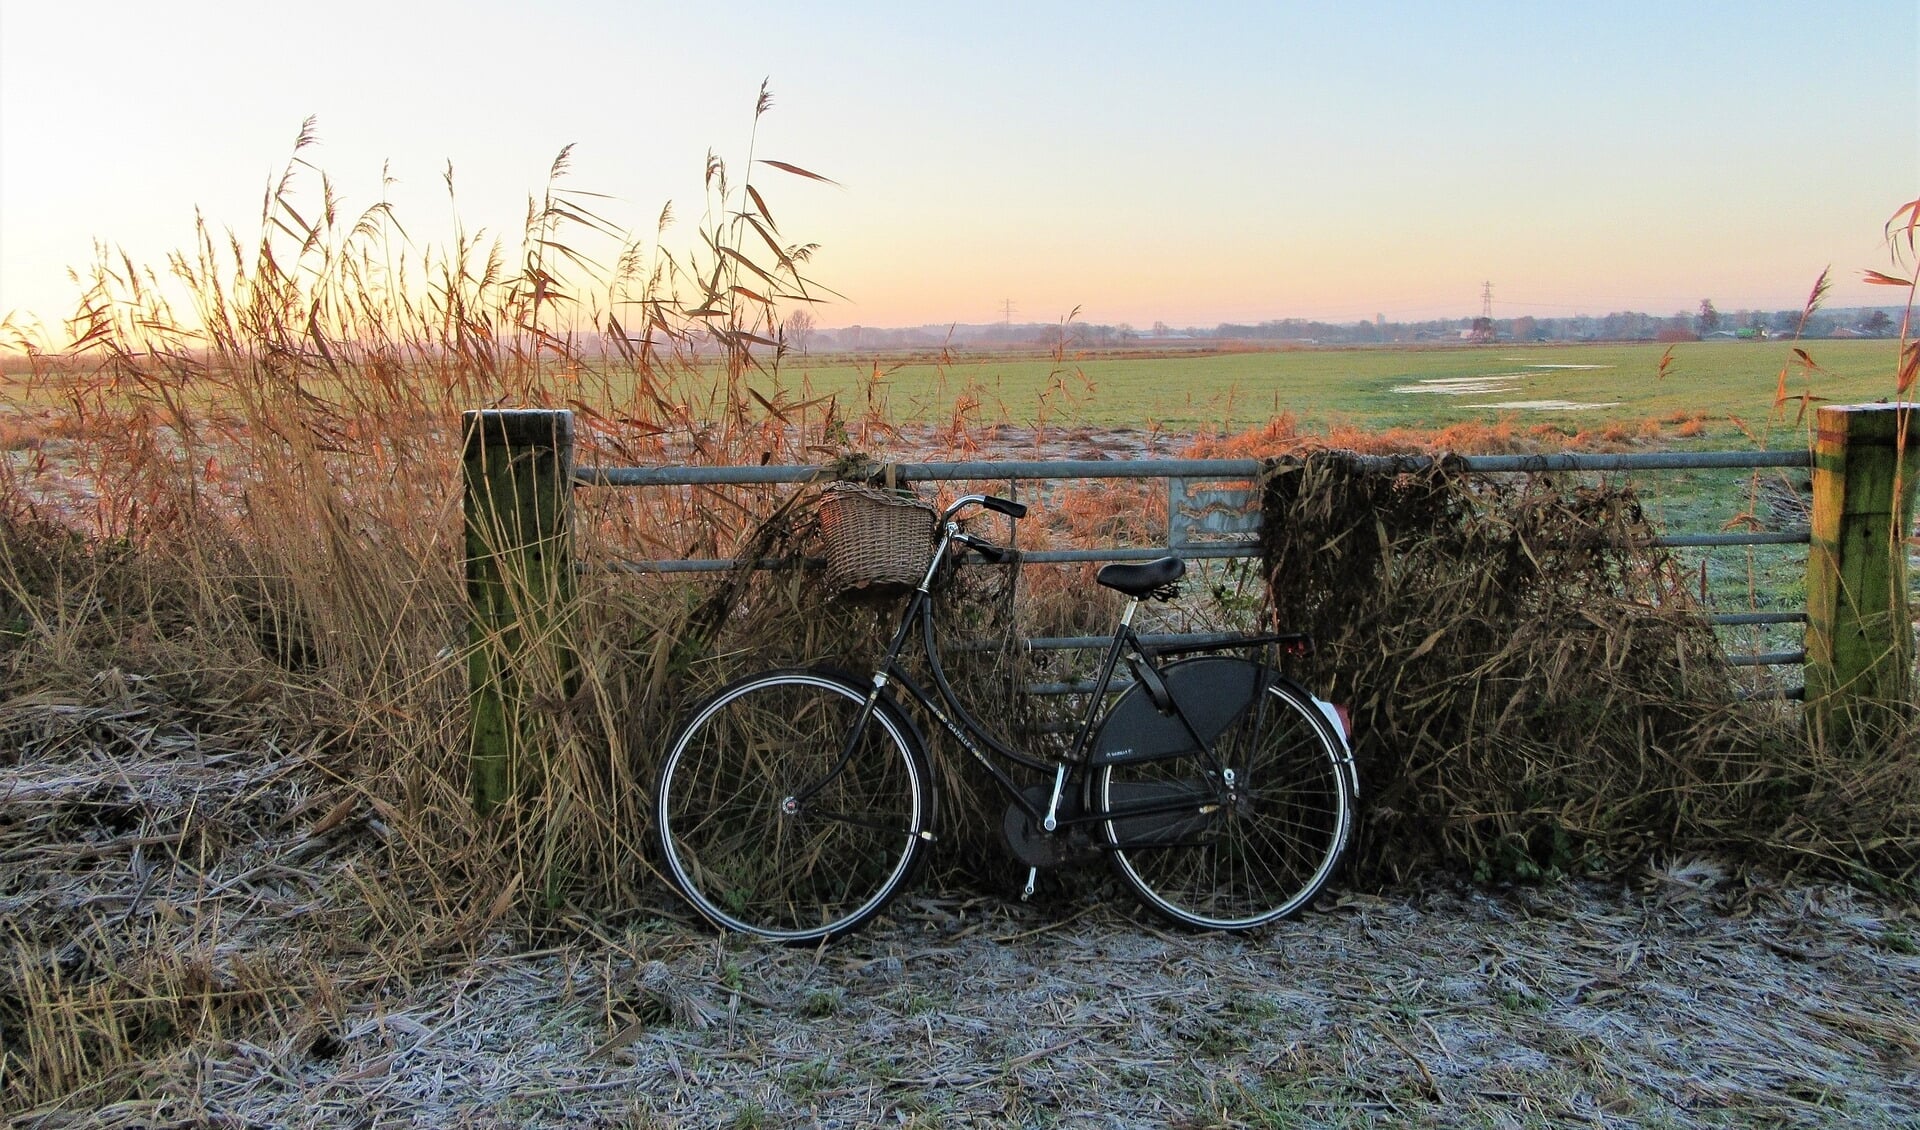 https://pixabay.com/photos/sunrise-bicycle-grandma-s-bike-3893333/